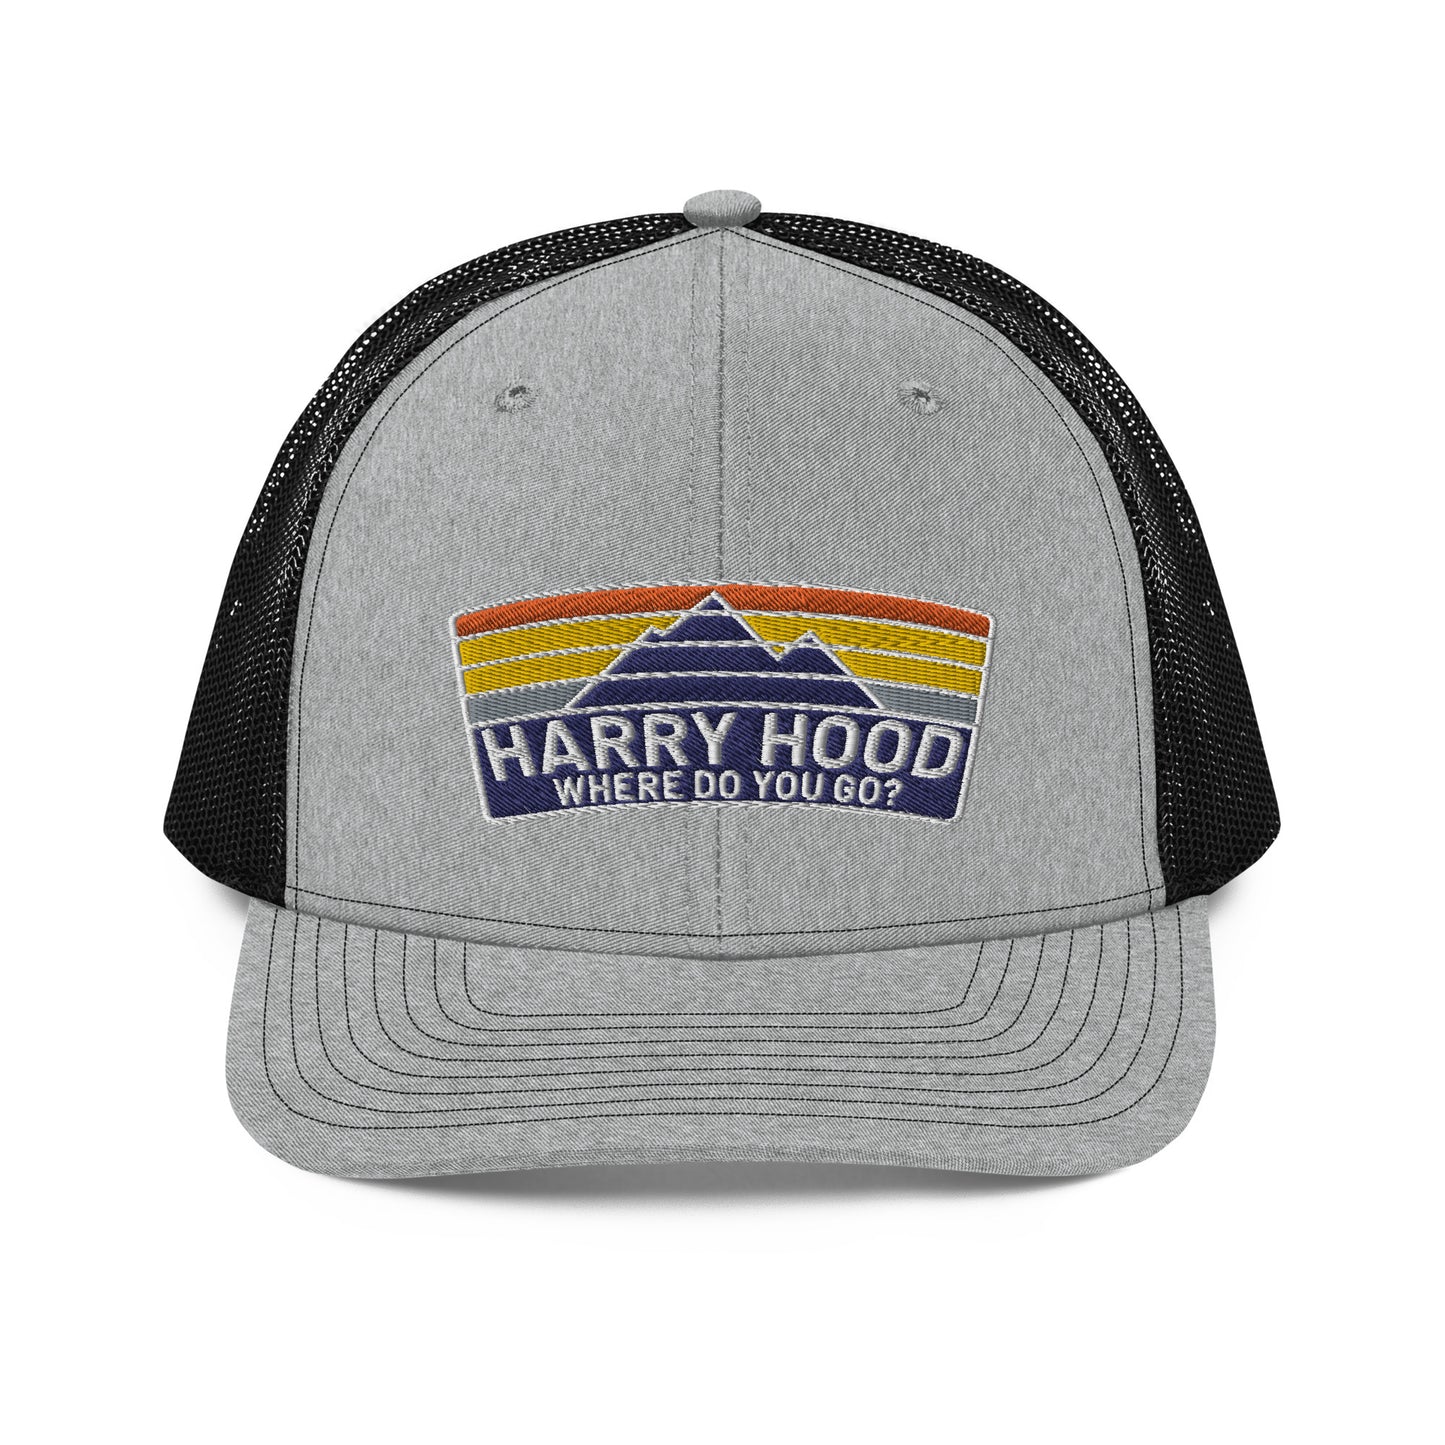 Harry Hood Embroidery 112 Snapback Cap